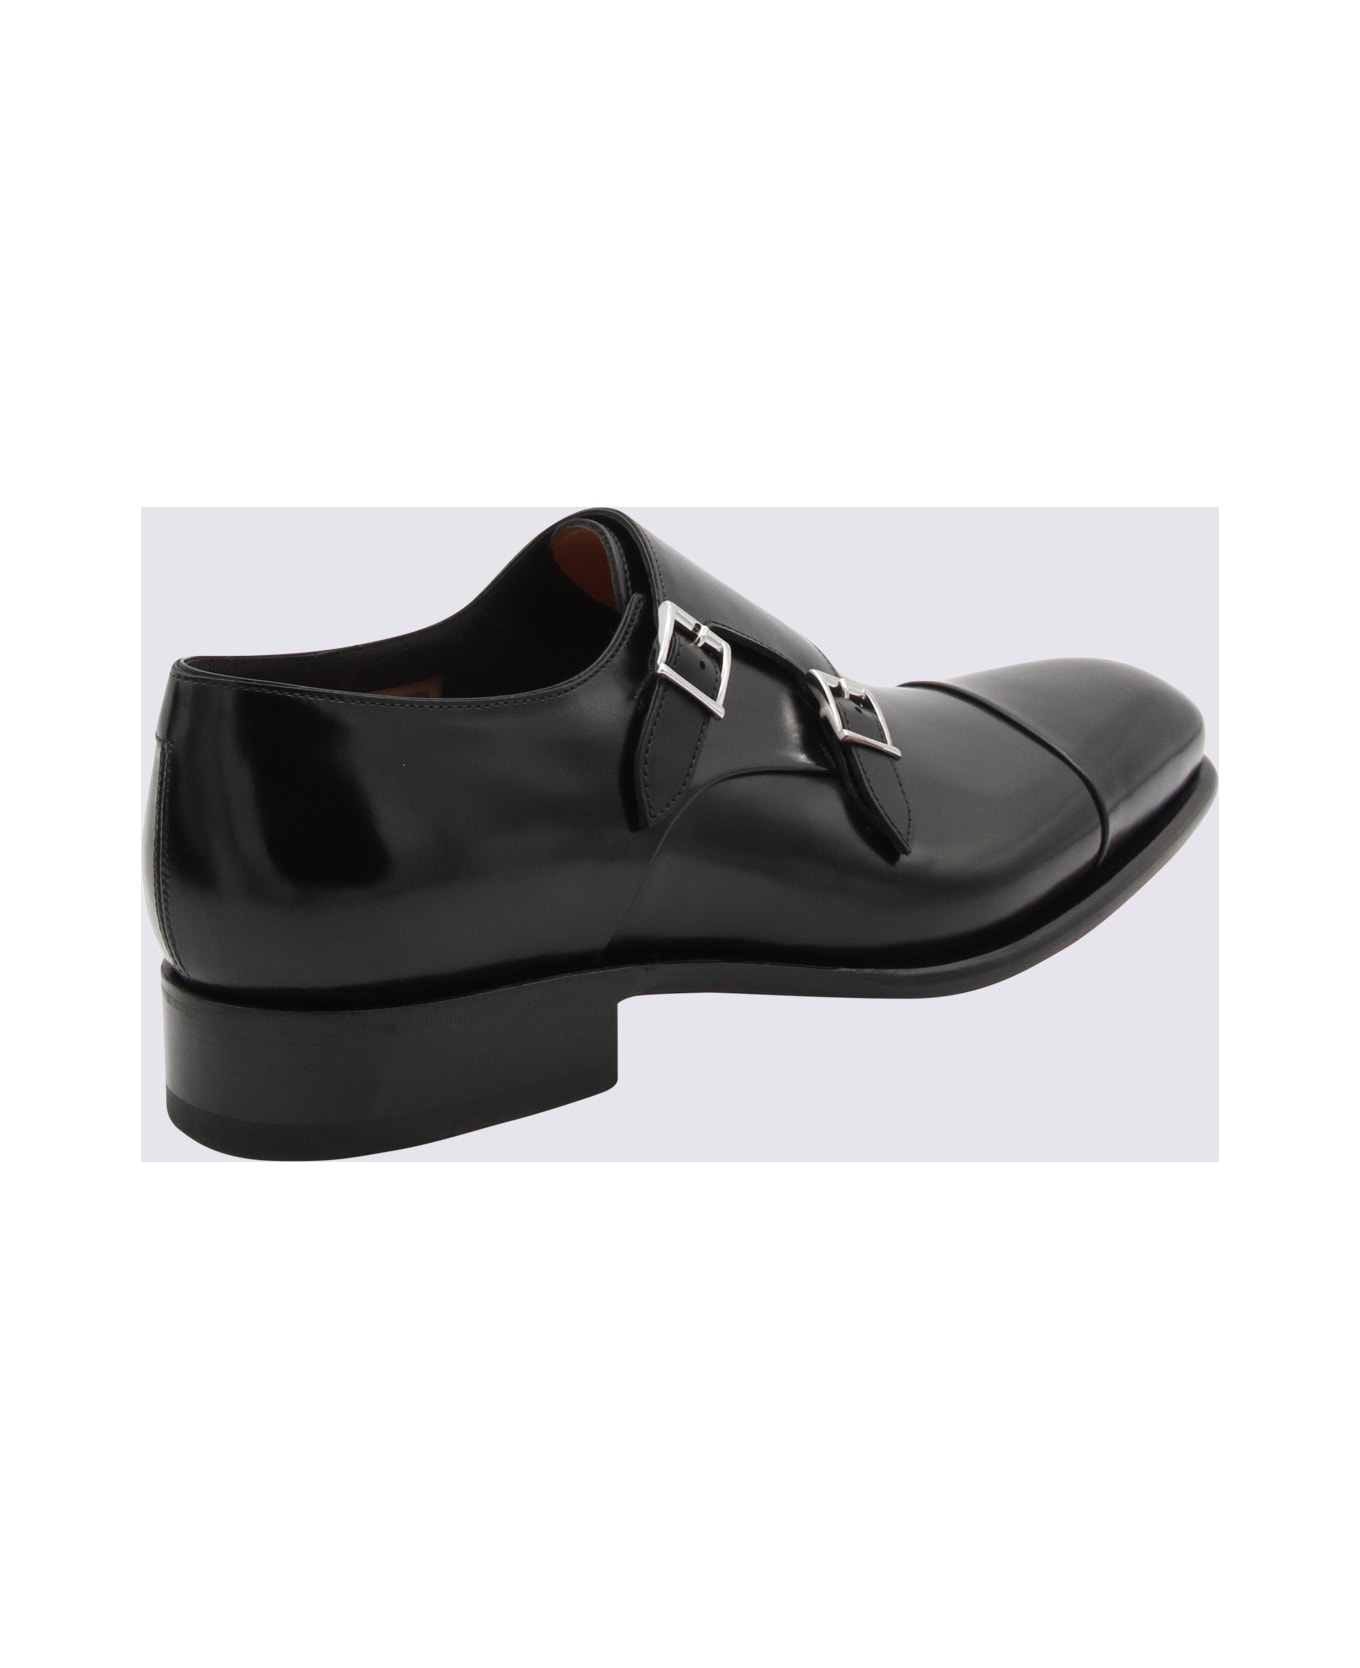 Santoni Black Leather Formal Shoes - Black